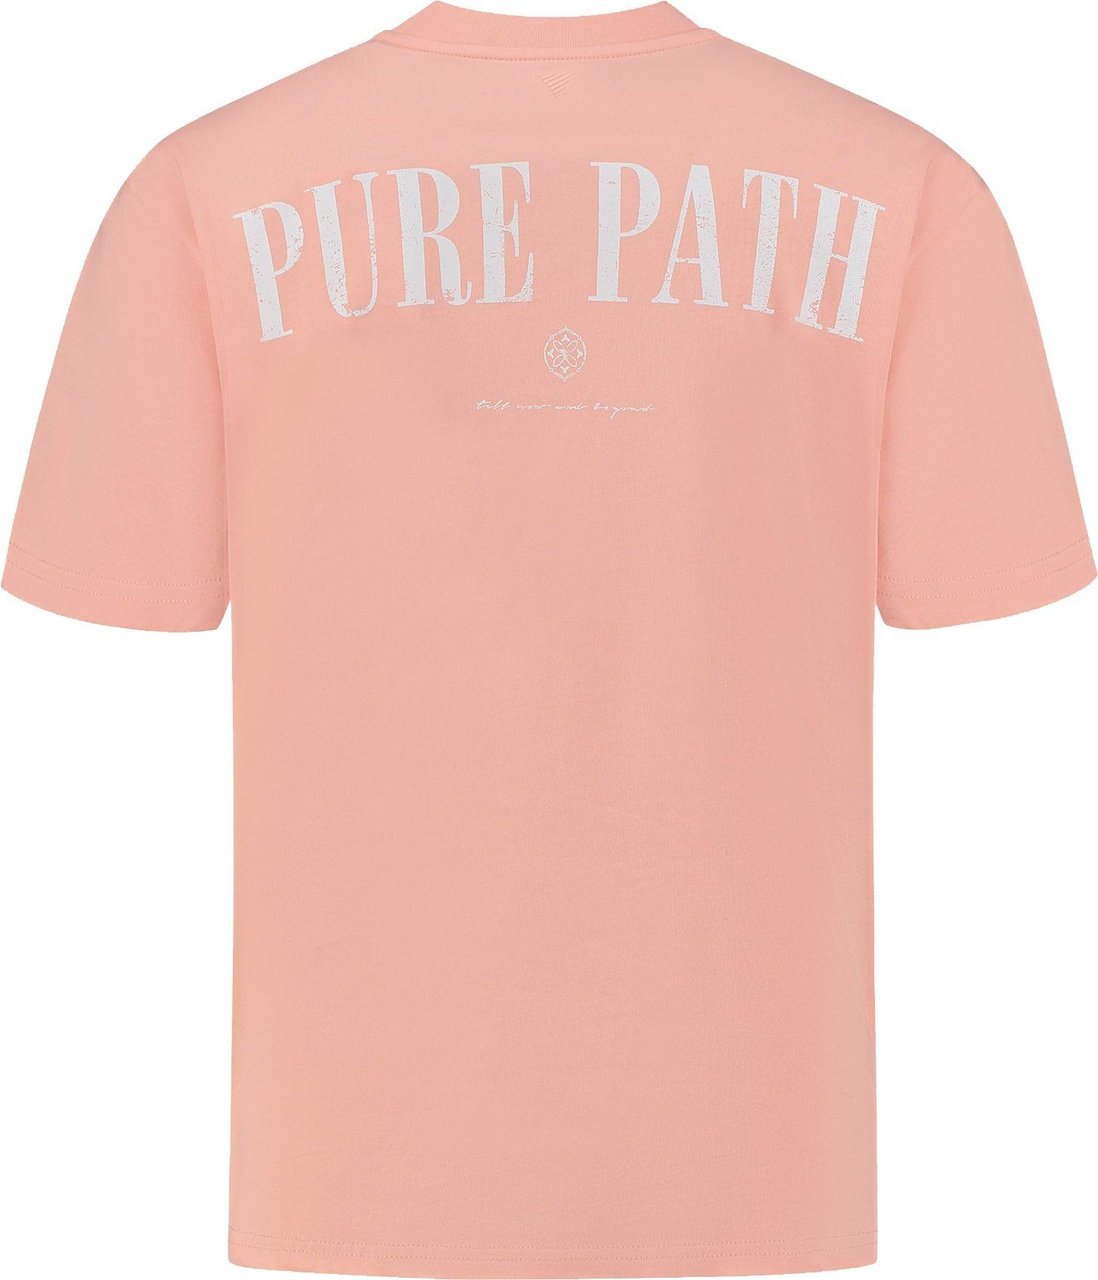 Pure Path Vintage logo tee Oranje